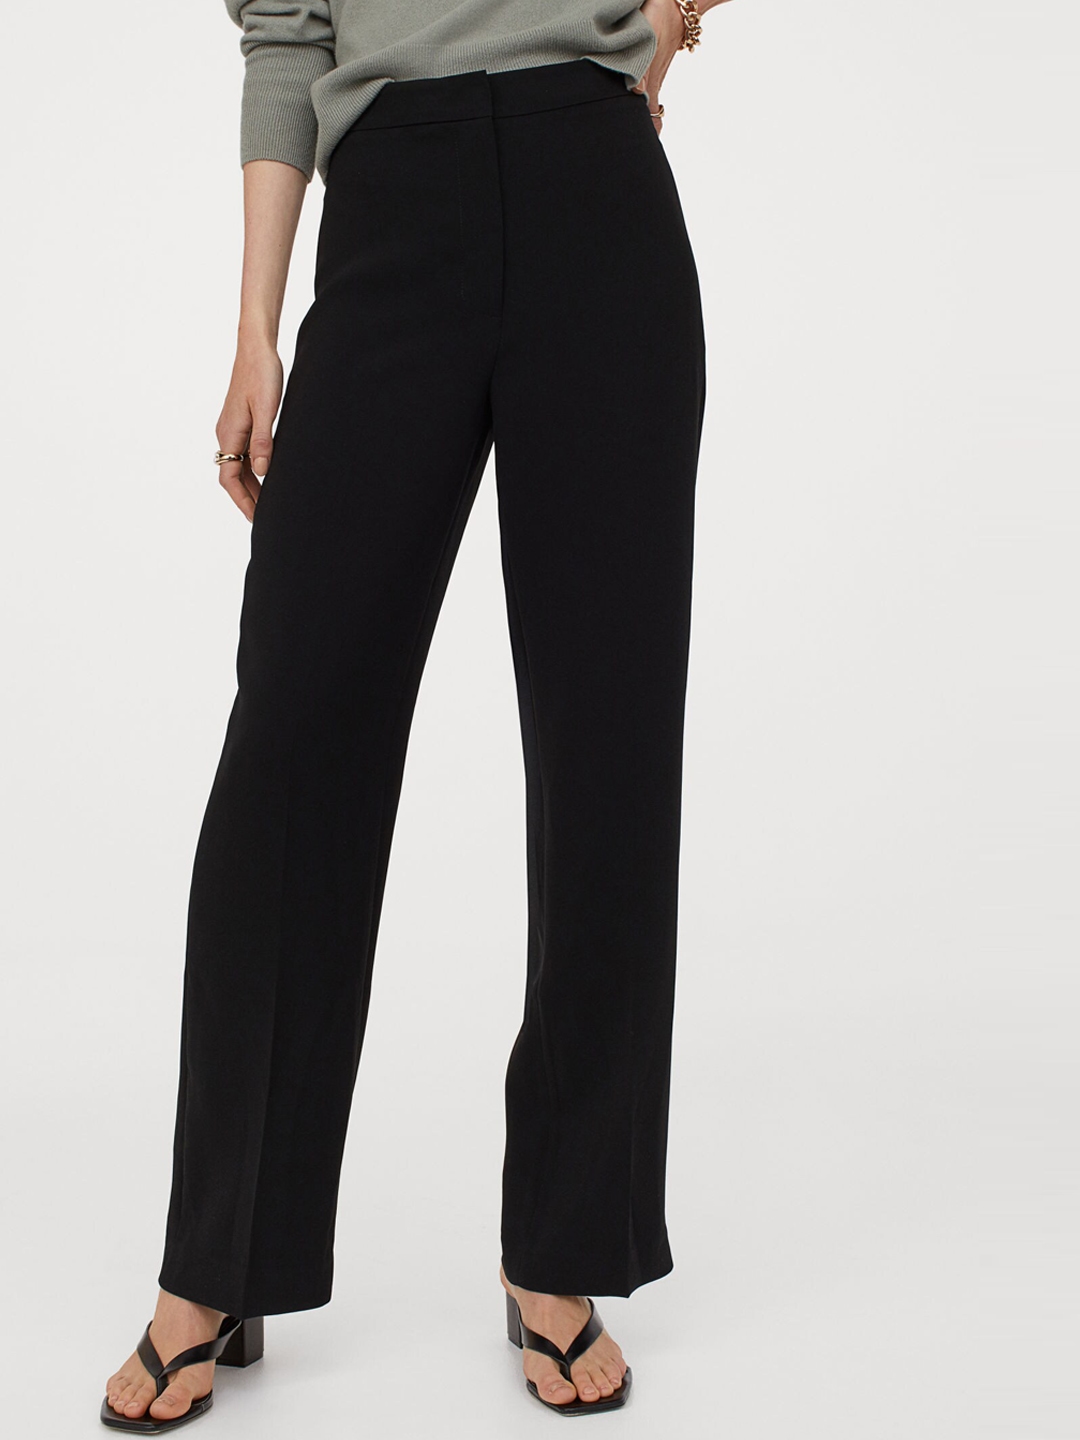 Buy Black Trousers & Pants for Women by Styli Online | Ajio.com-saigonsouth.com.vn